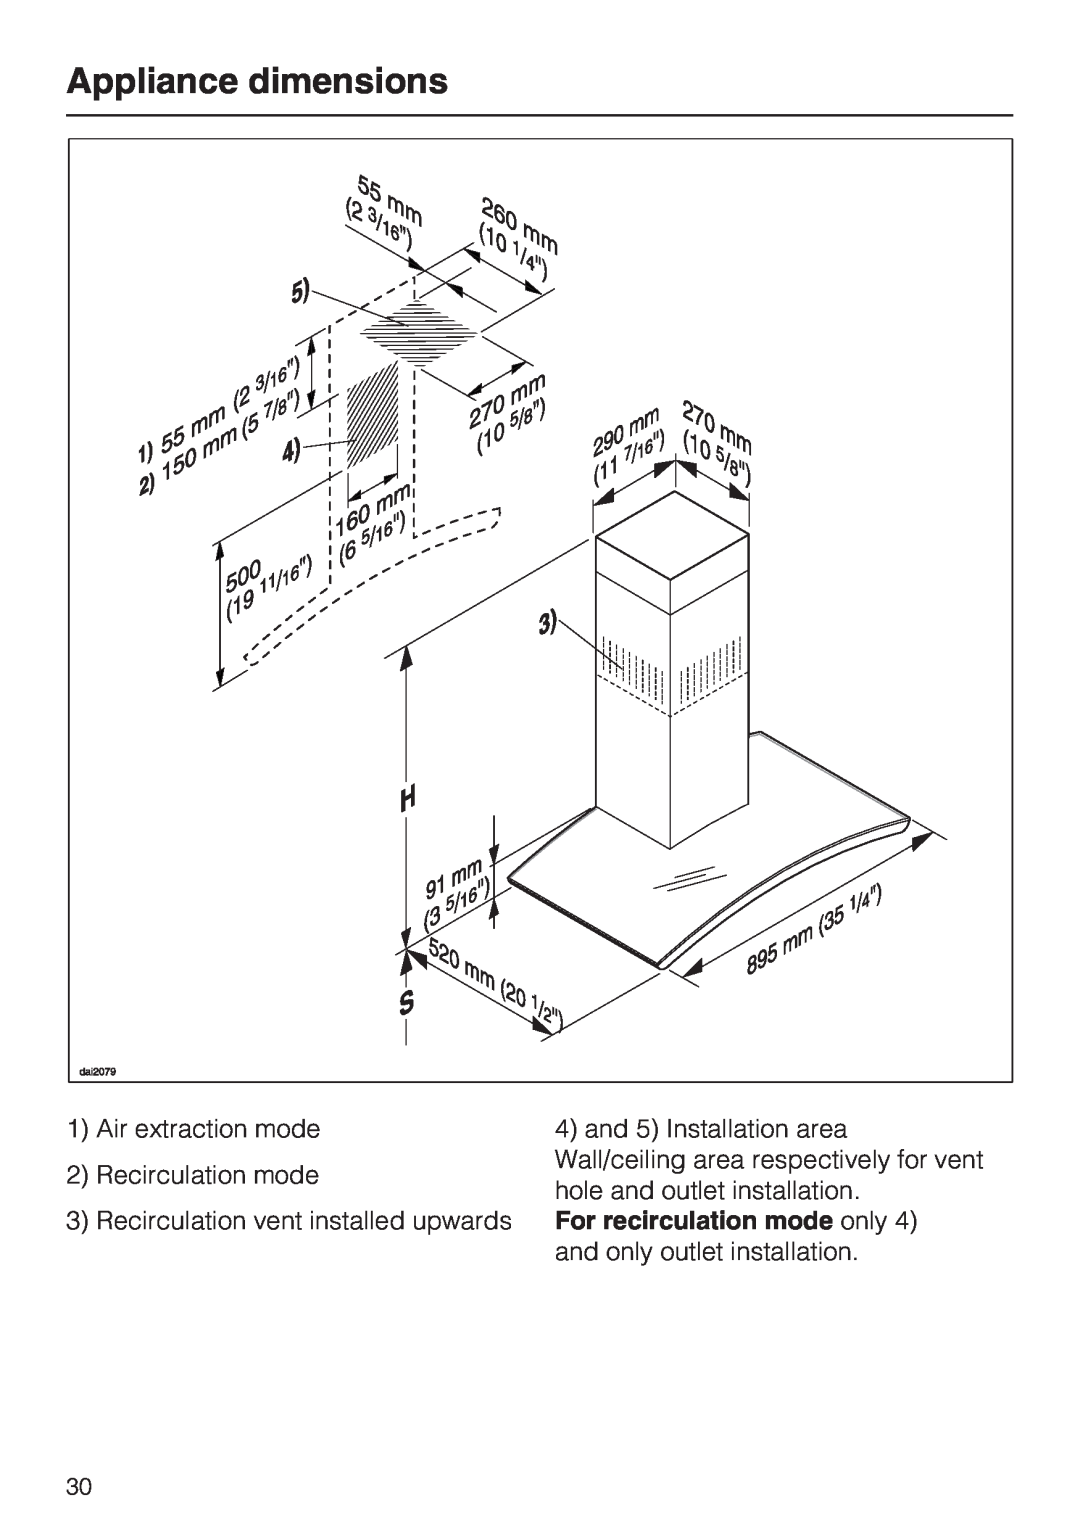 Miele DA5190W Appliance dimensions, 1Air extraction mode 2Recirculation mode, 3Recirculation vent installed upwards 